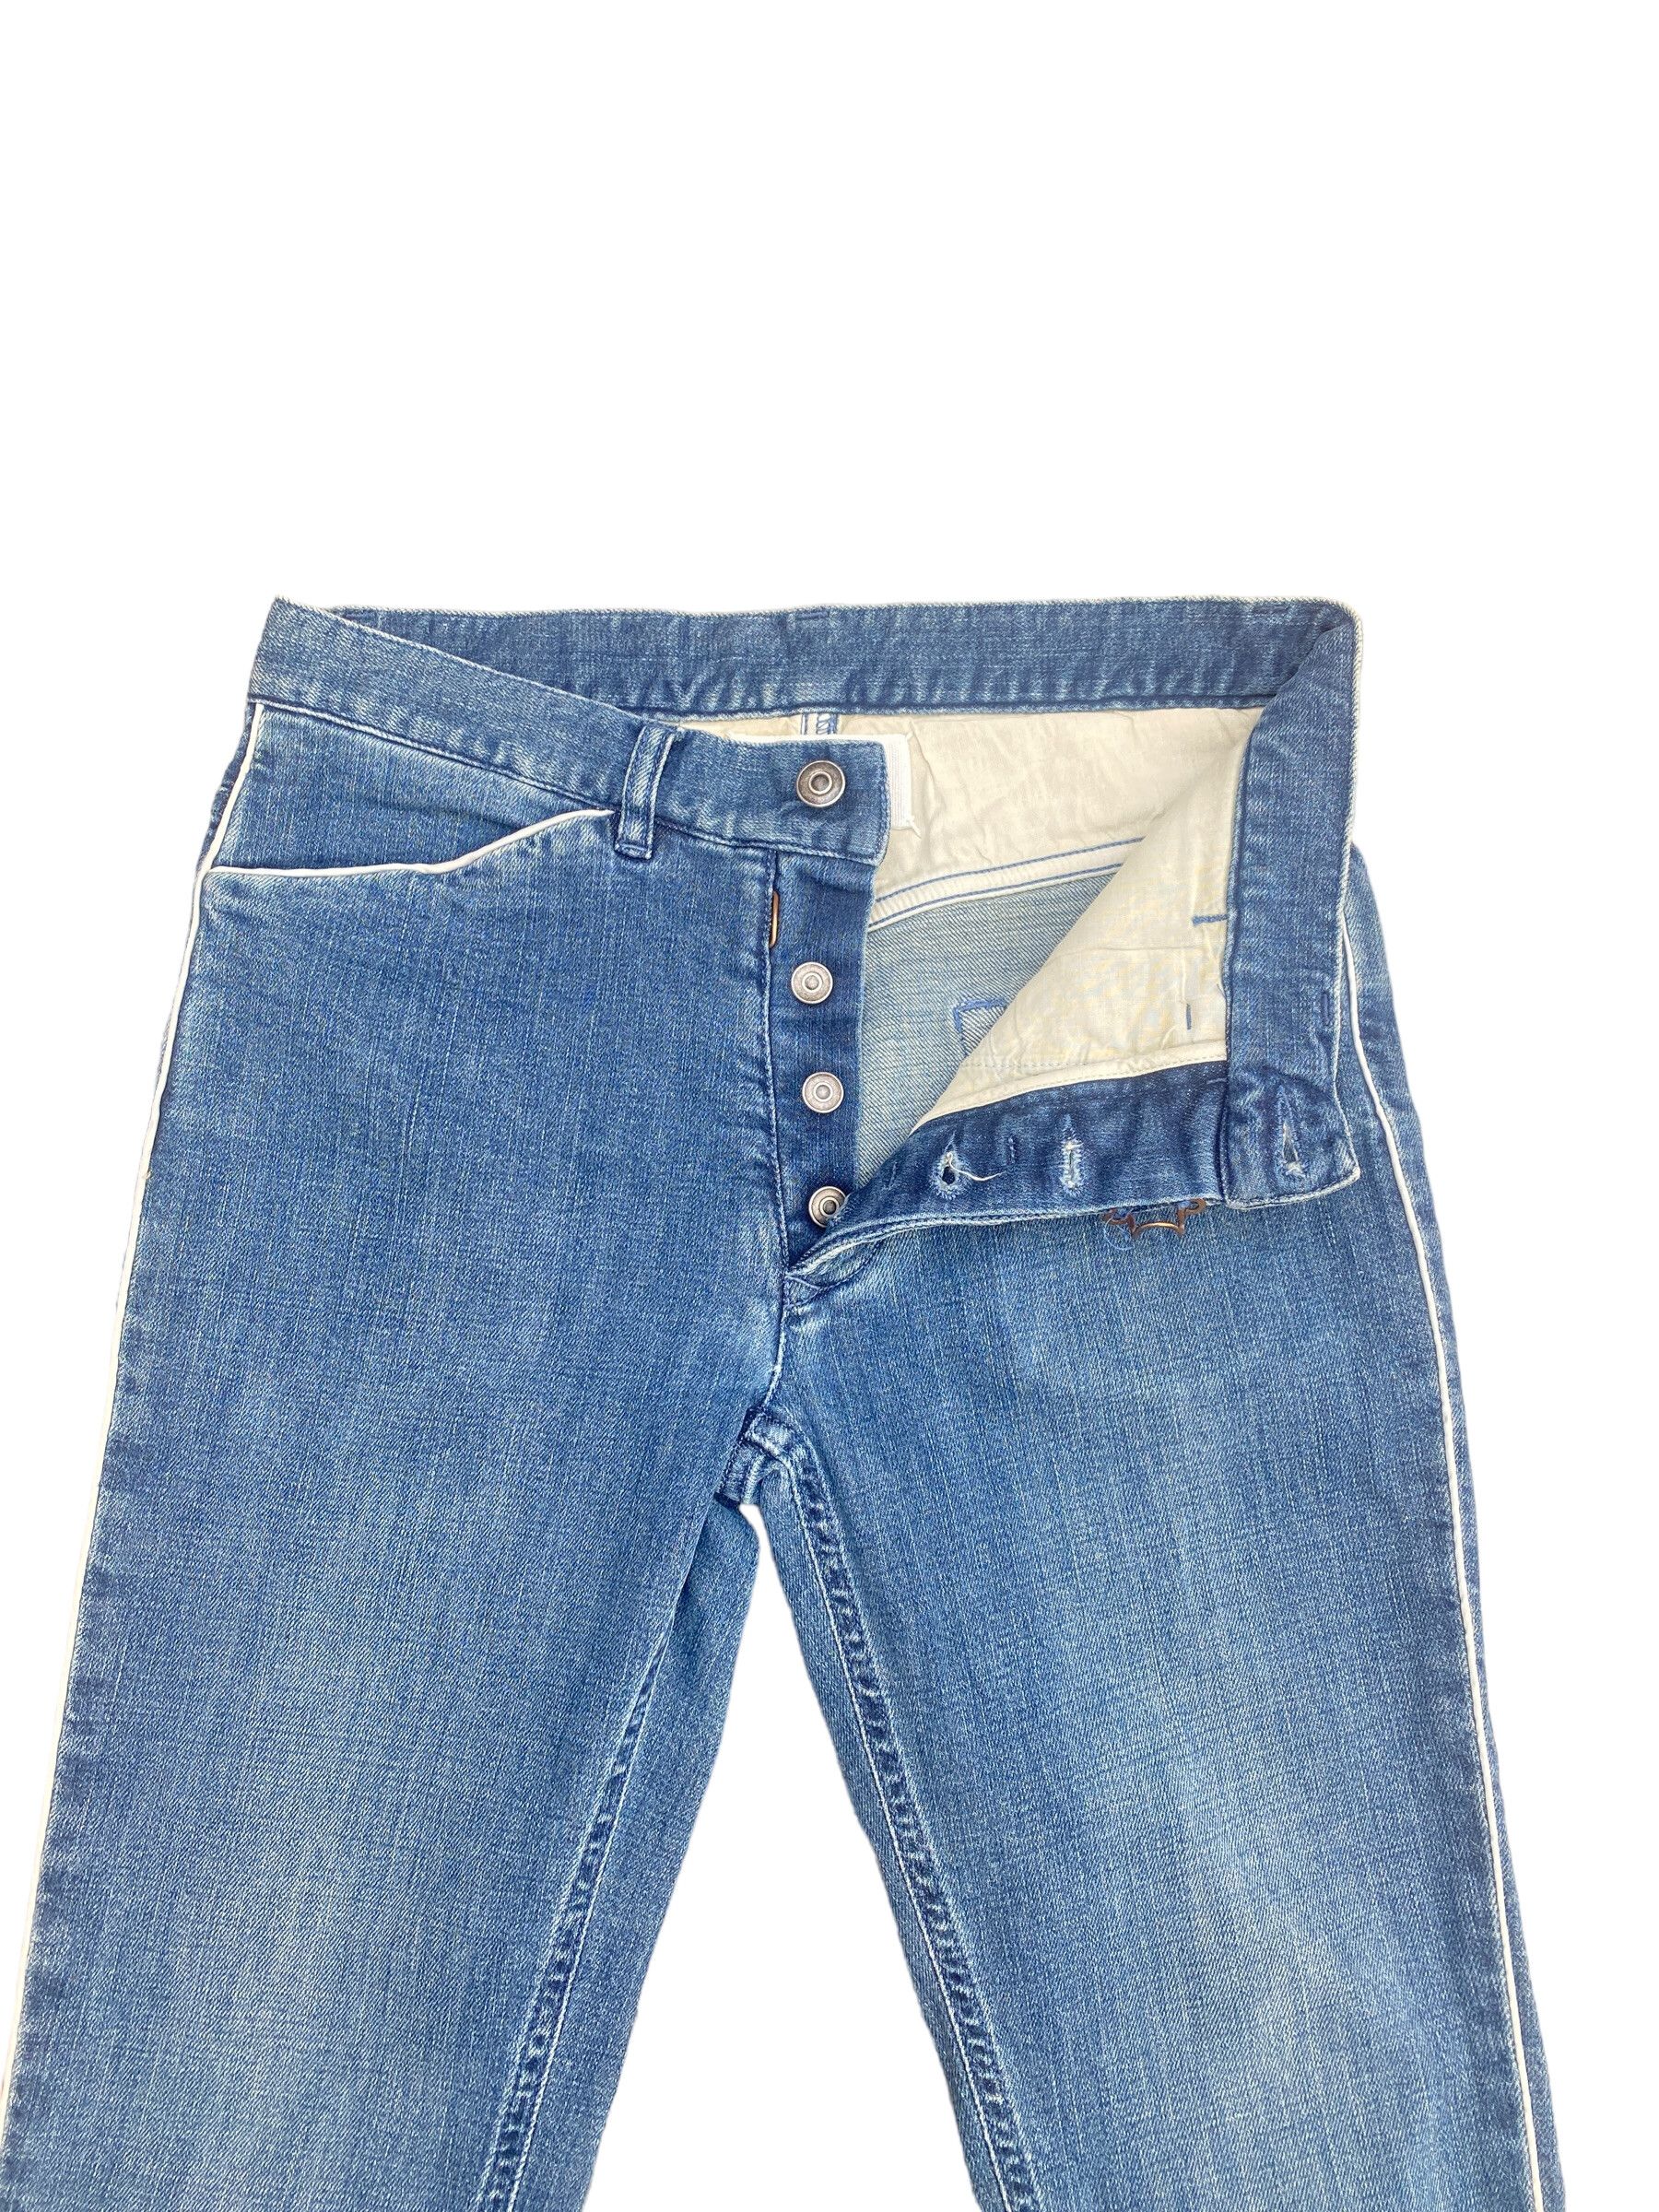 Maison Margiela SS 2008 Light blue denim jeans Size US 28 / EU 44 - 3 Thumbnail